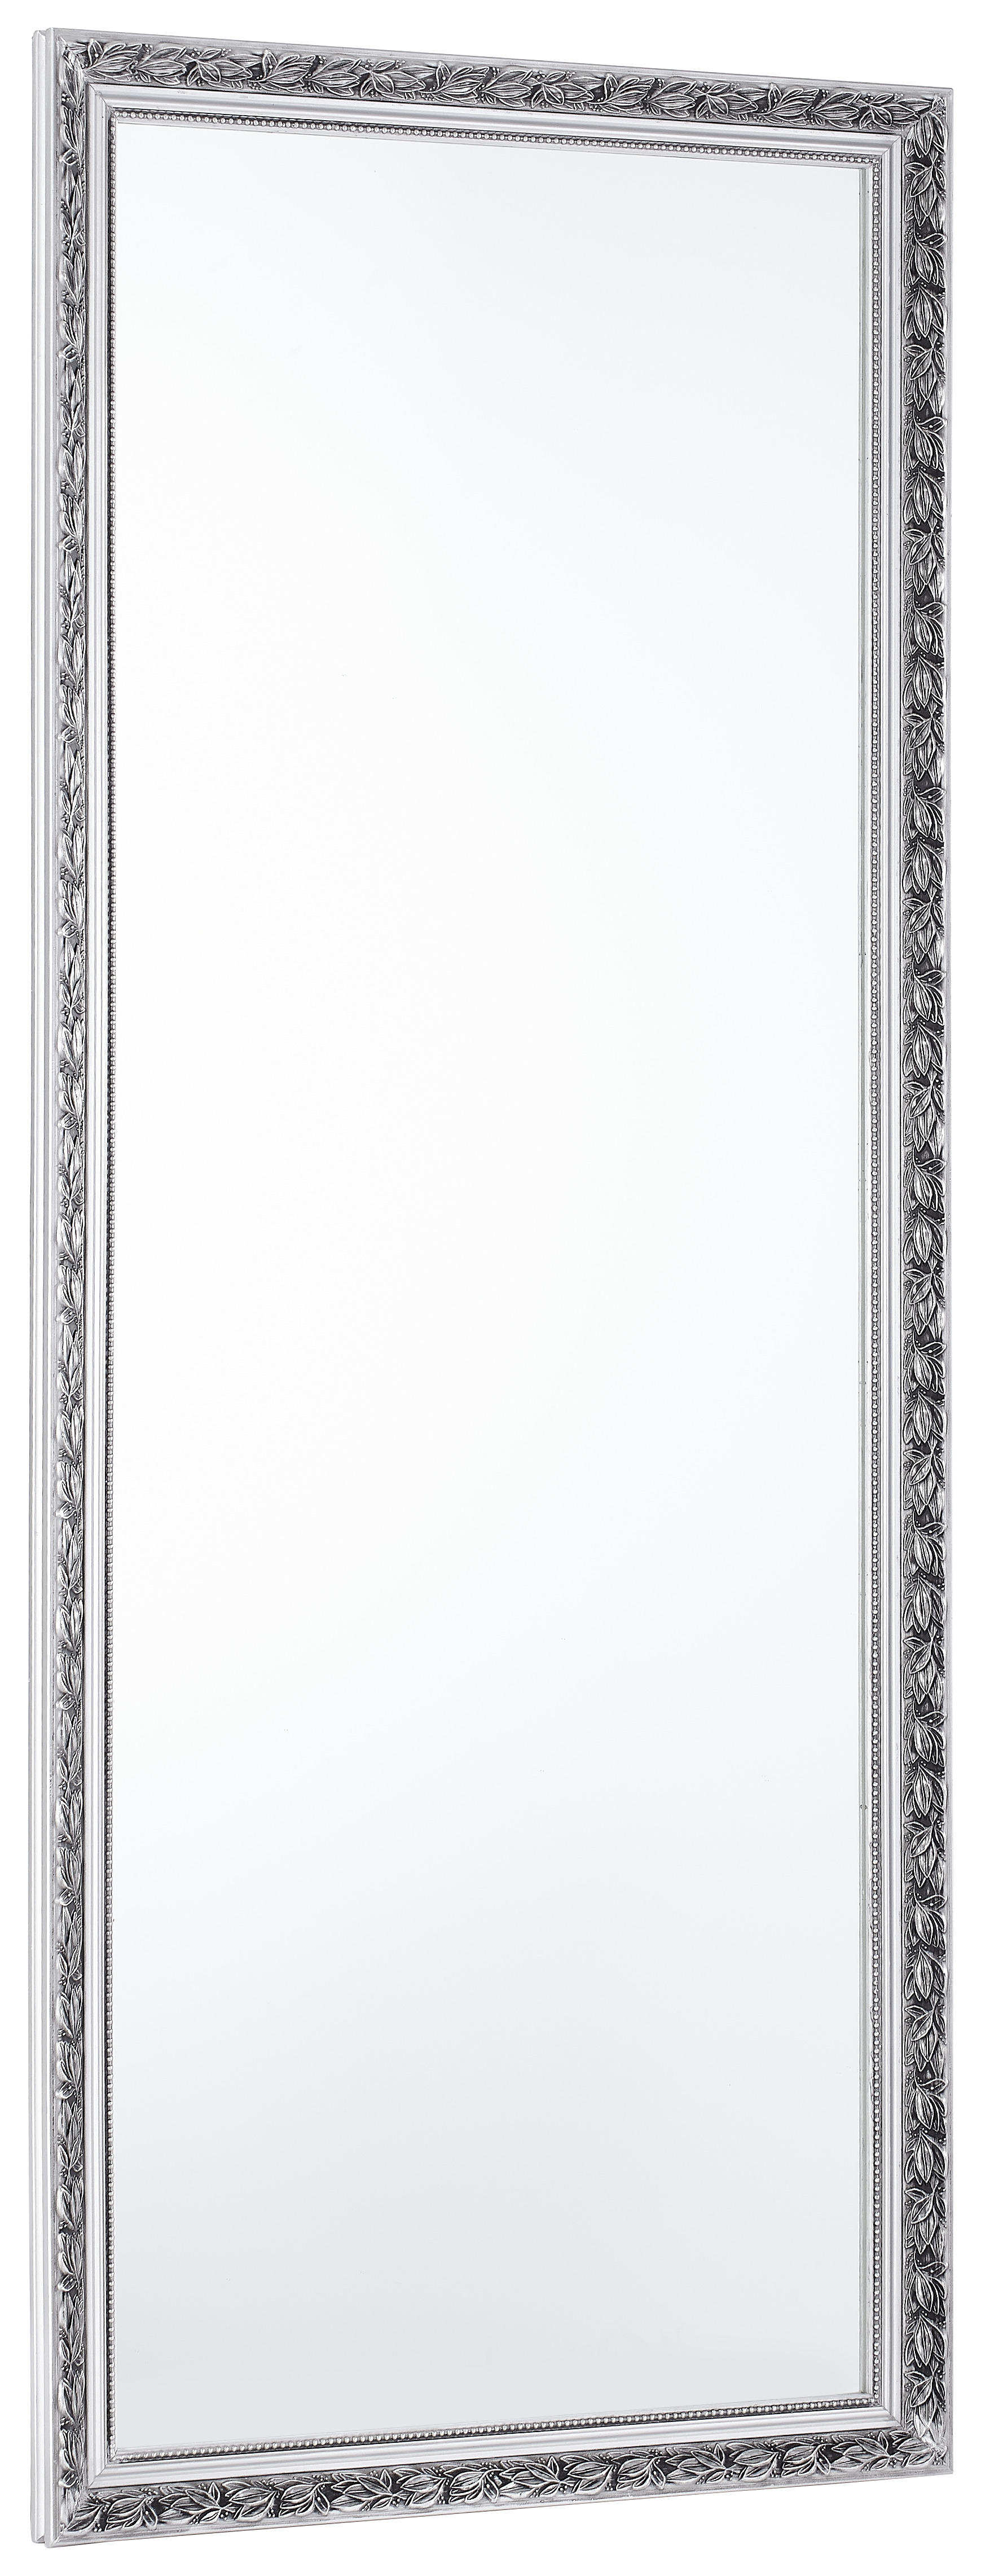 VÄGGSPEGEL 70/170/3,3 cm    - silver, Lifestyle, glas/trä (70/170/3,3cm) - Carryhome